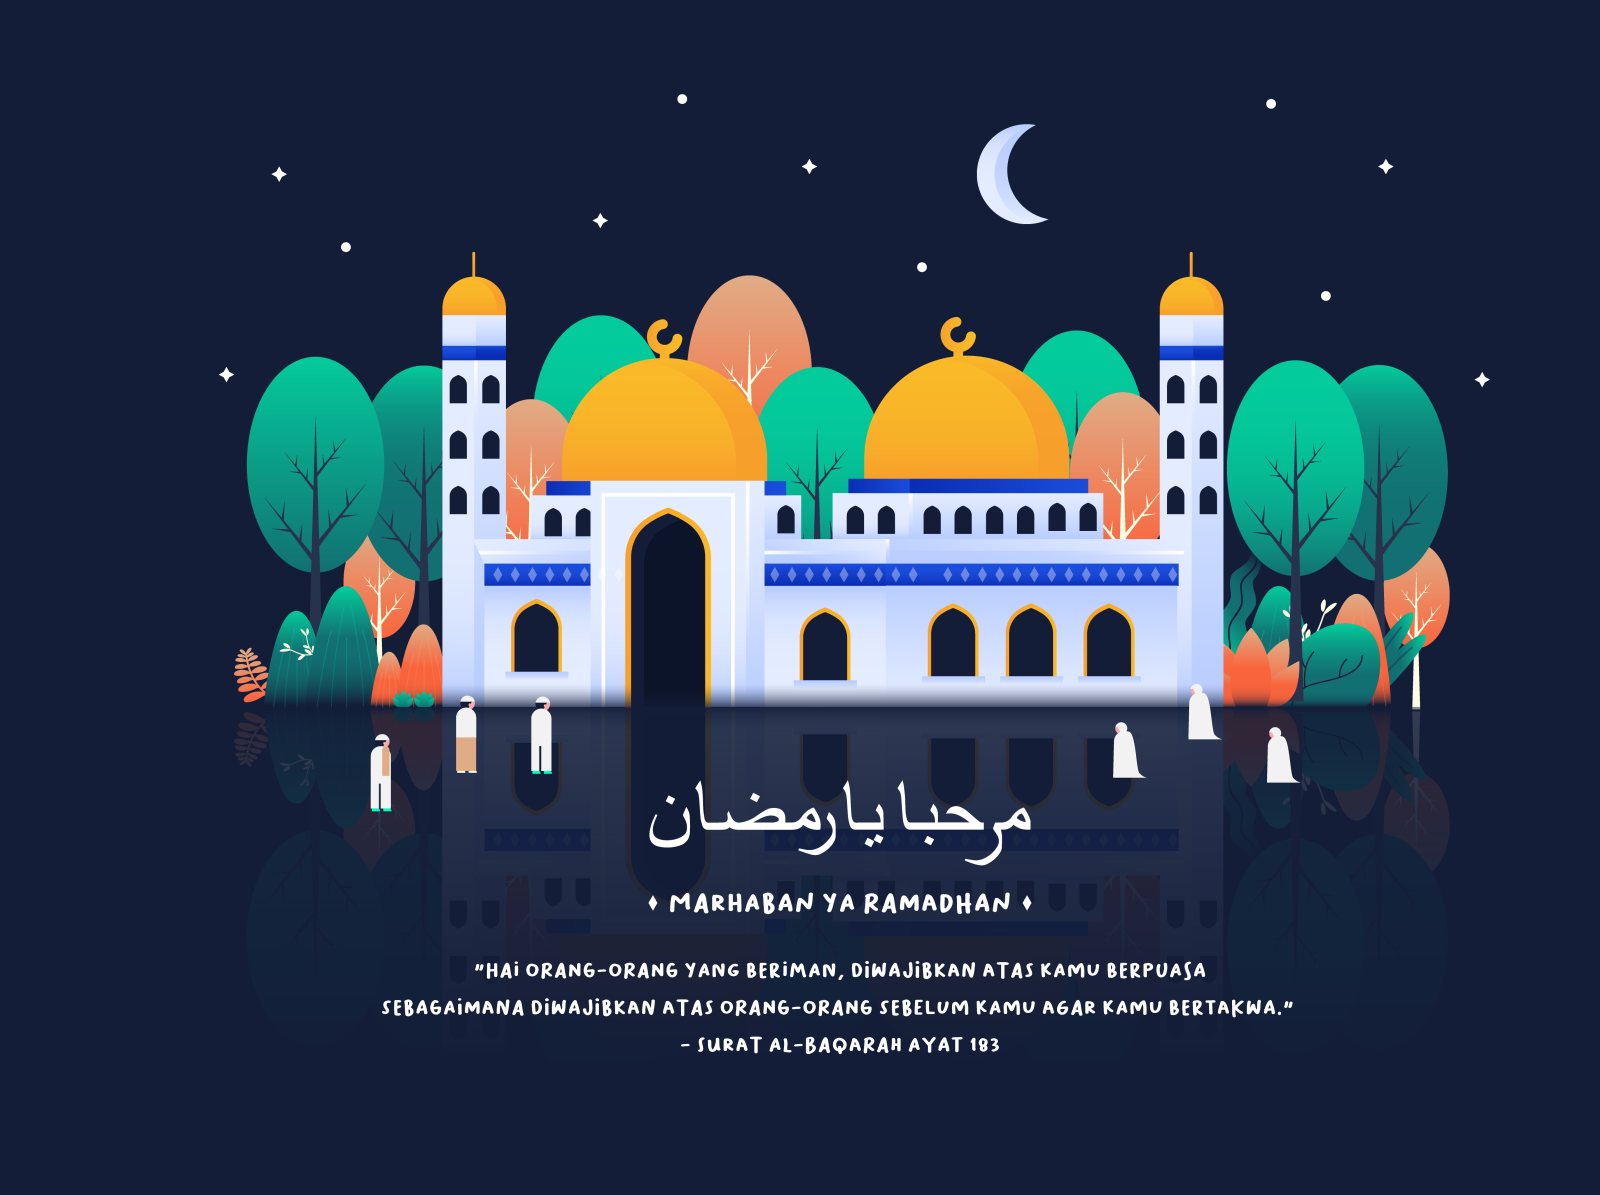  Marhaban  ya Ramadhan by Aliffajar for Noansa on Dribbble